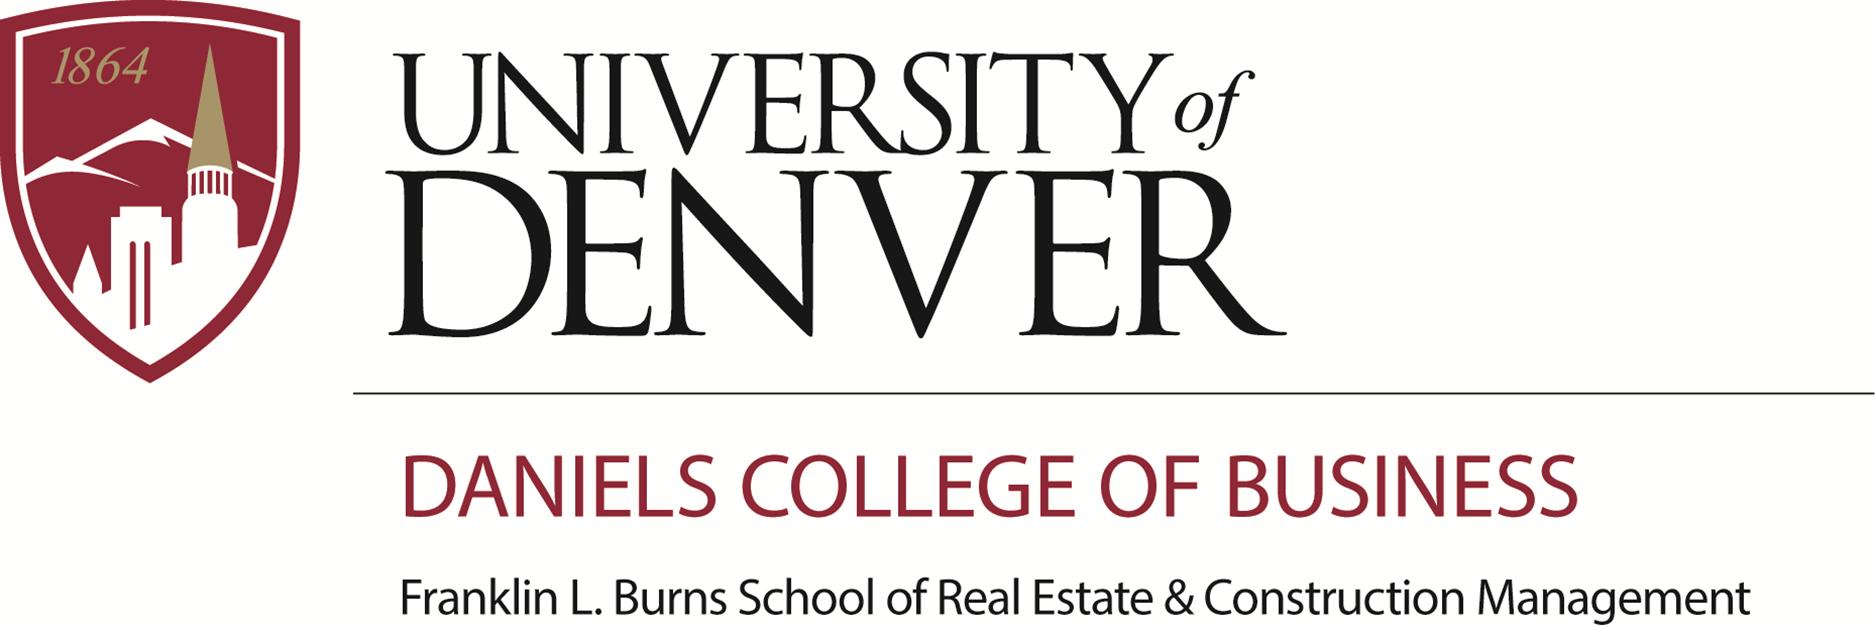 University of Denver, Daniels College of Business, Franklin L. Burns School of Real Estate and Construction Management